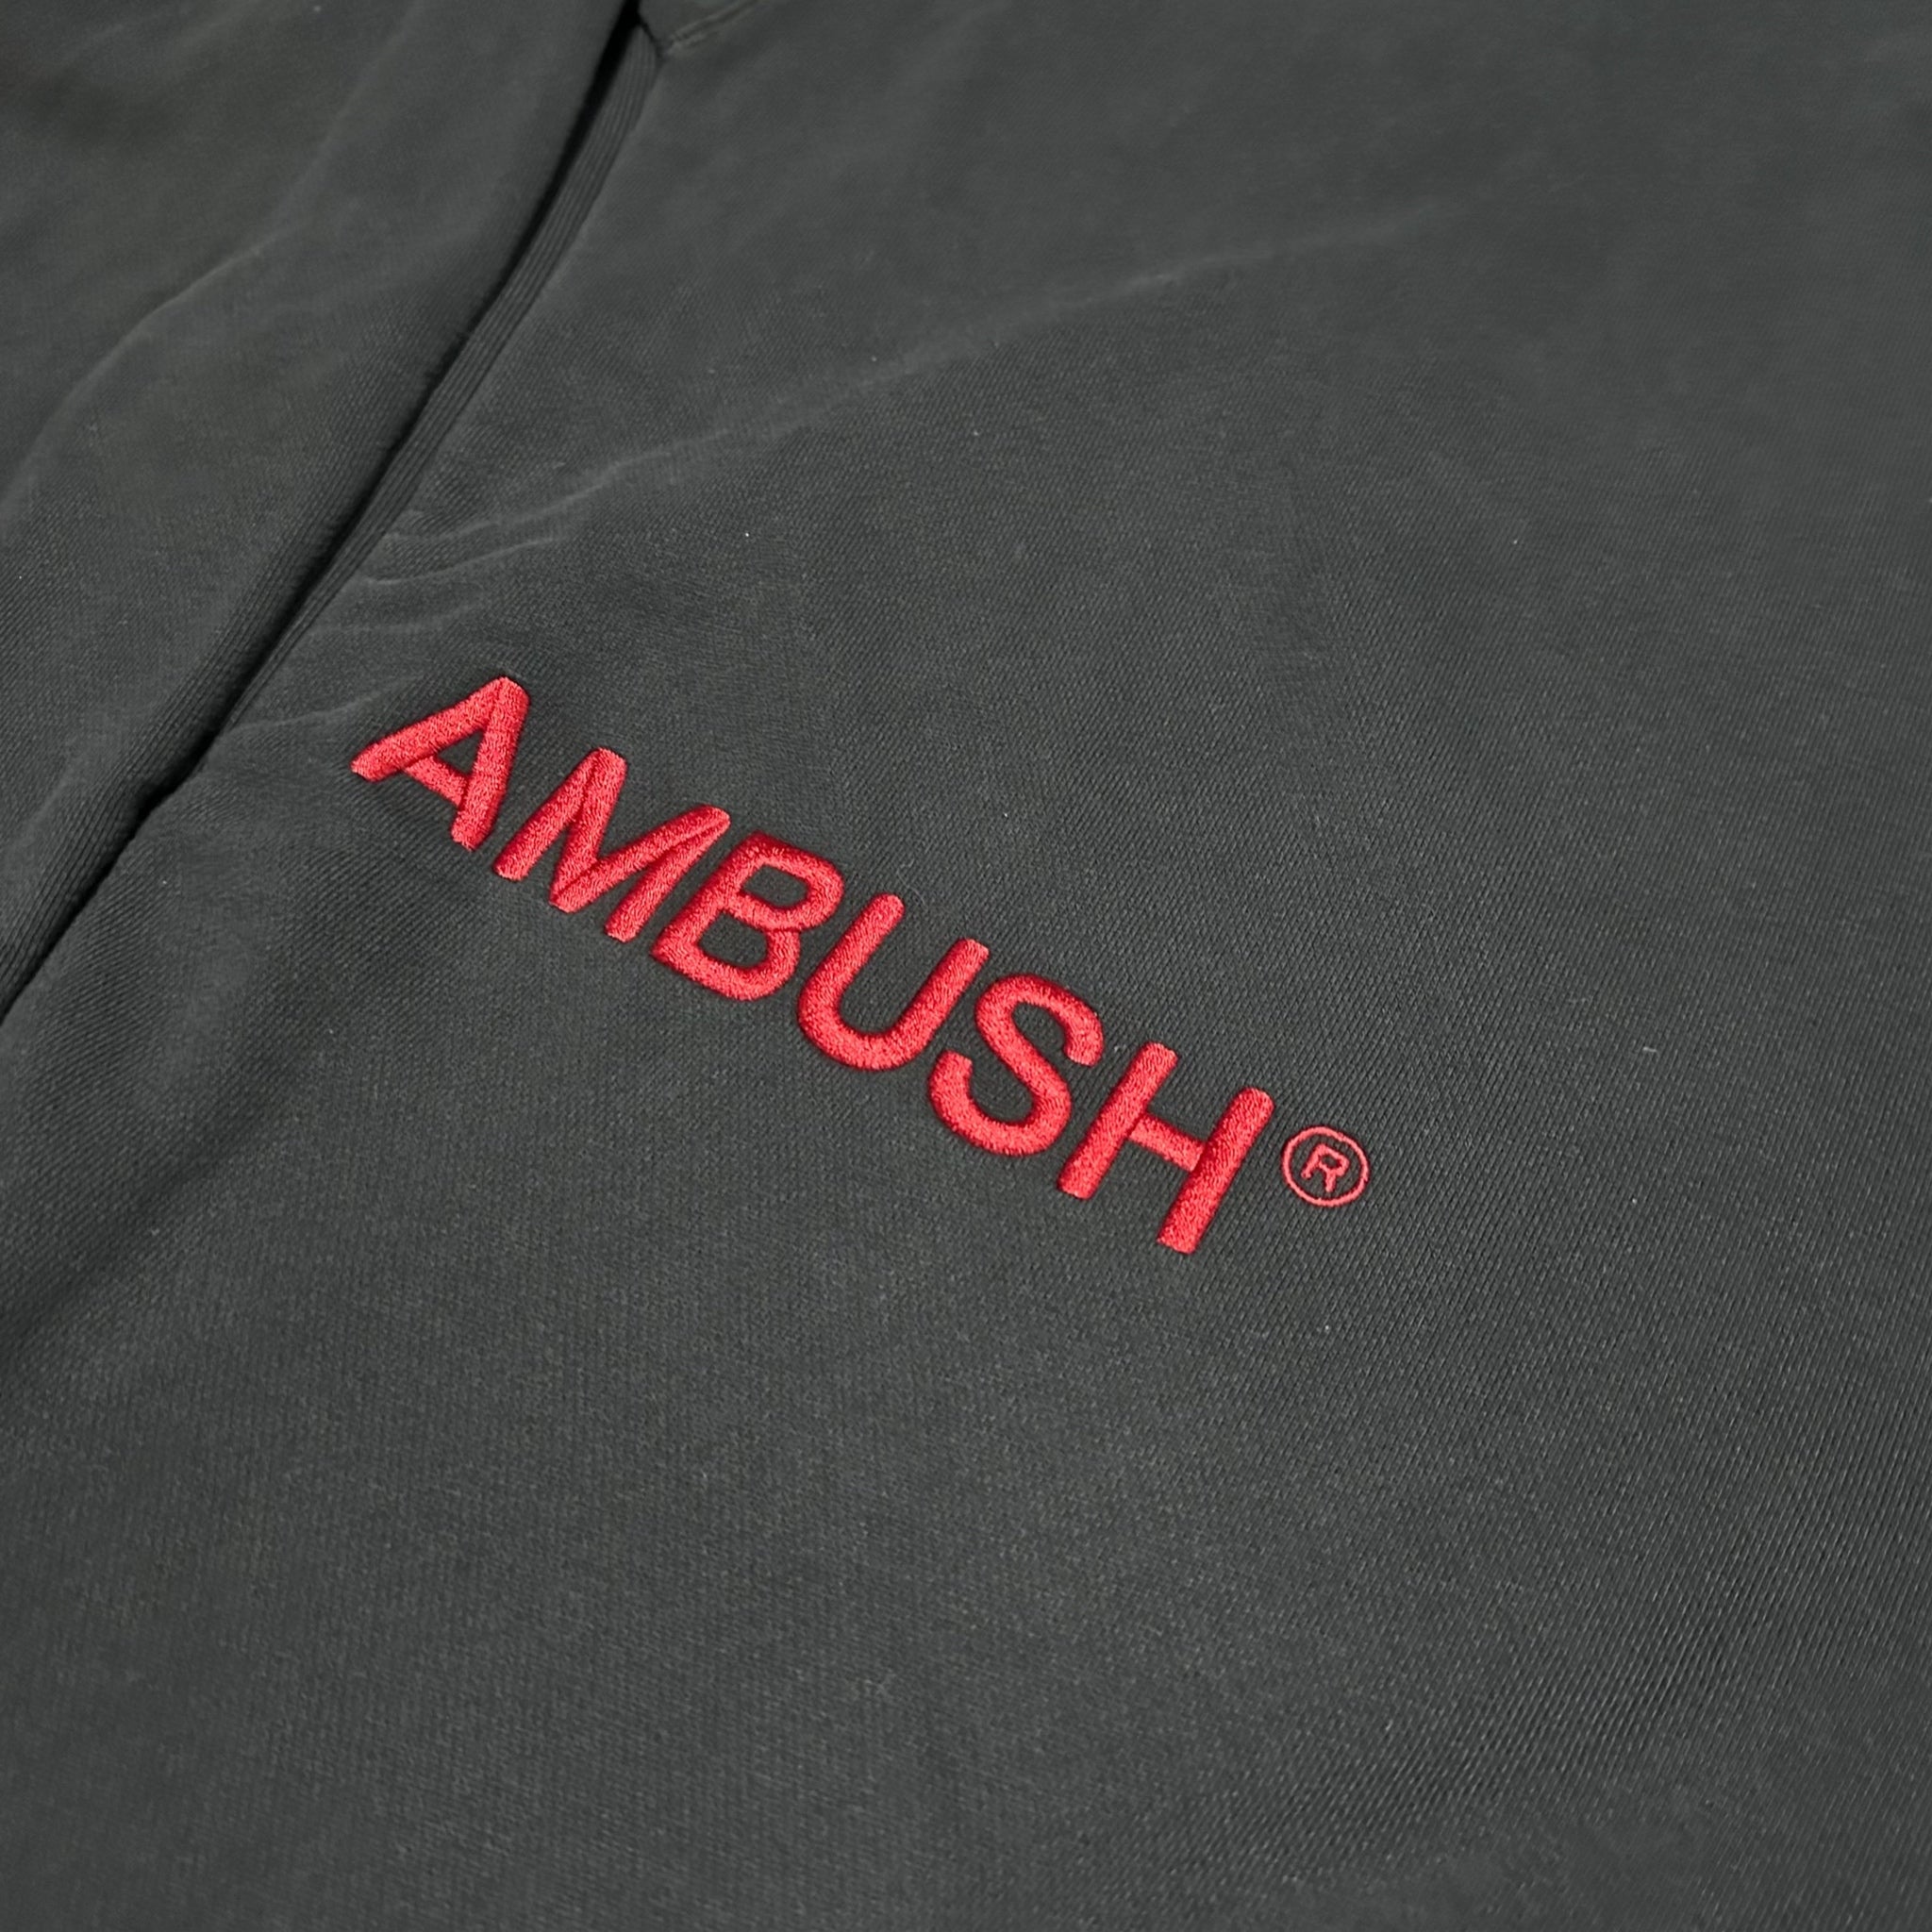 Ambush Crewneck Inserts Sweatshirt Original Allure